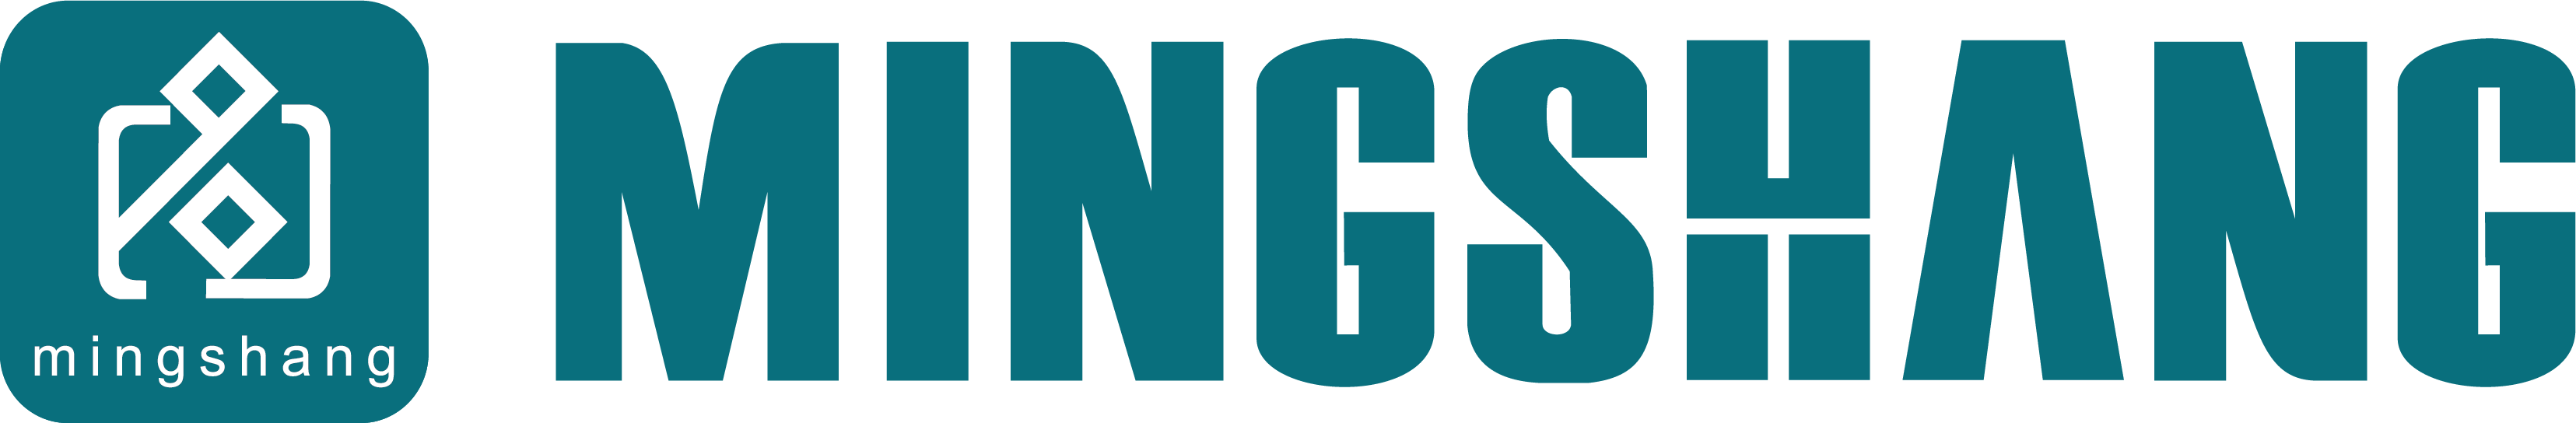 Mingshang Technology logo